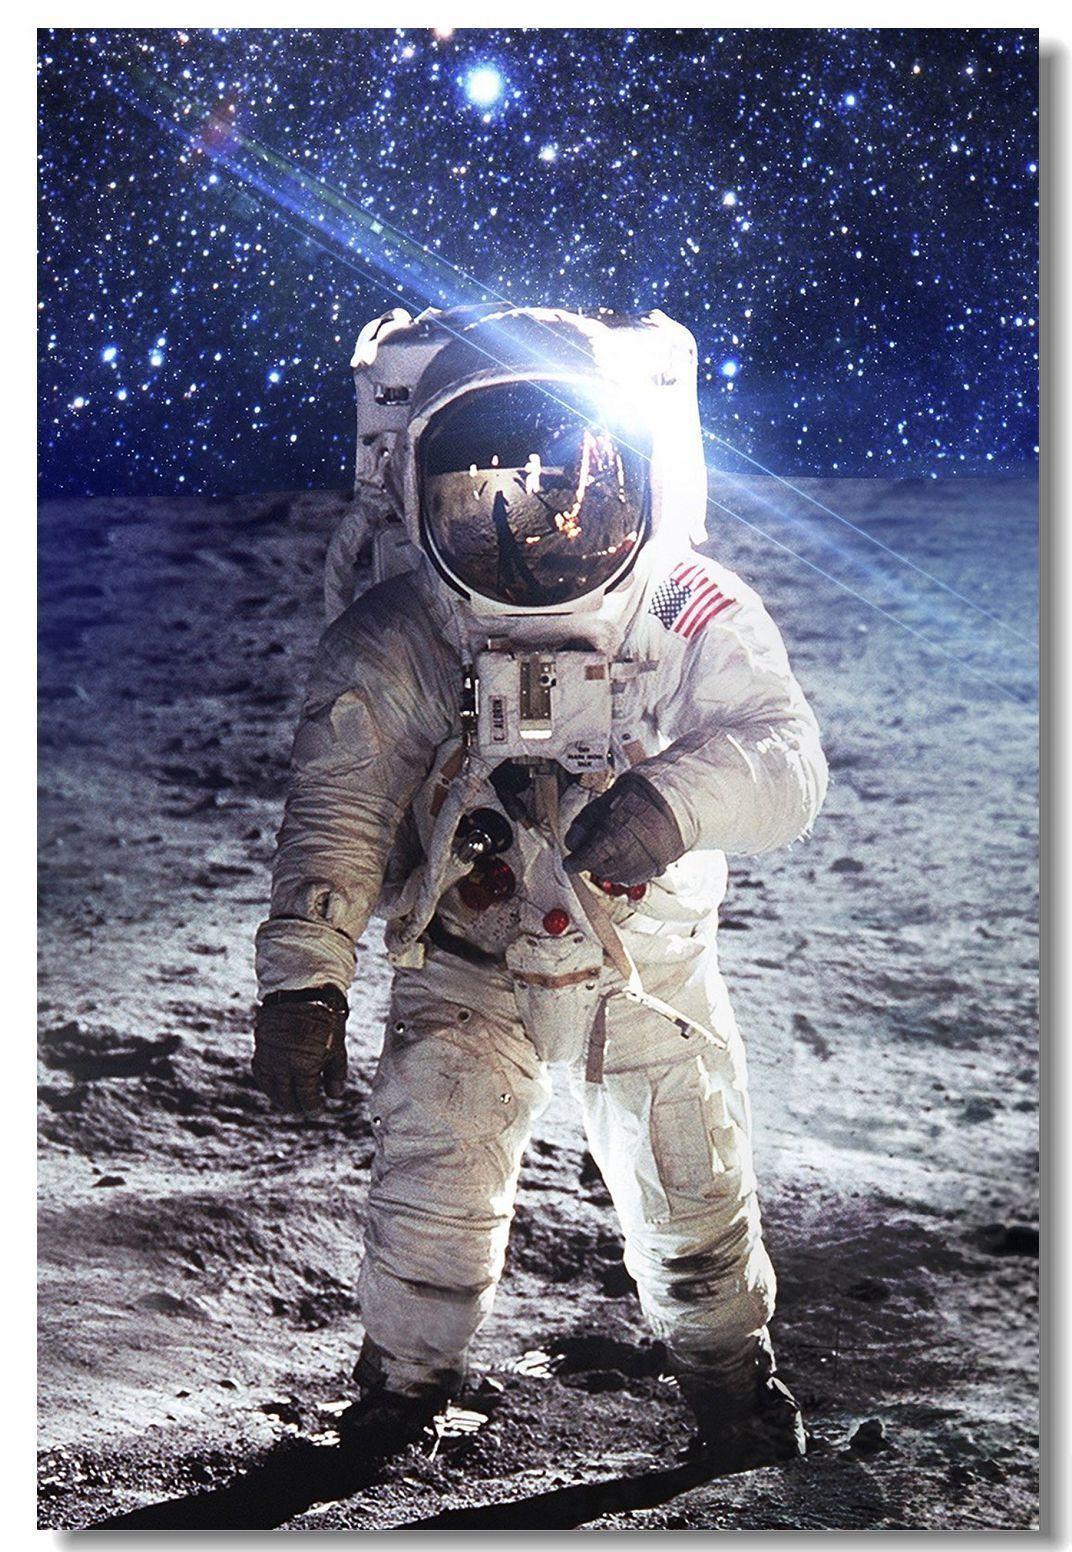 Astronaut Drinking Beer Wallpapers - Top Free Astronaut Drinking Beer